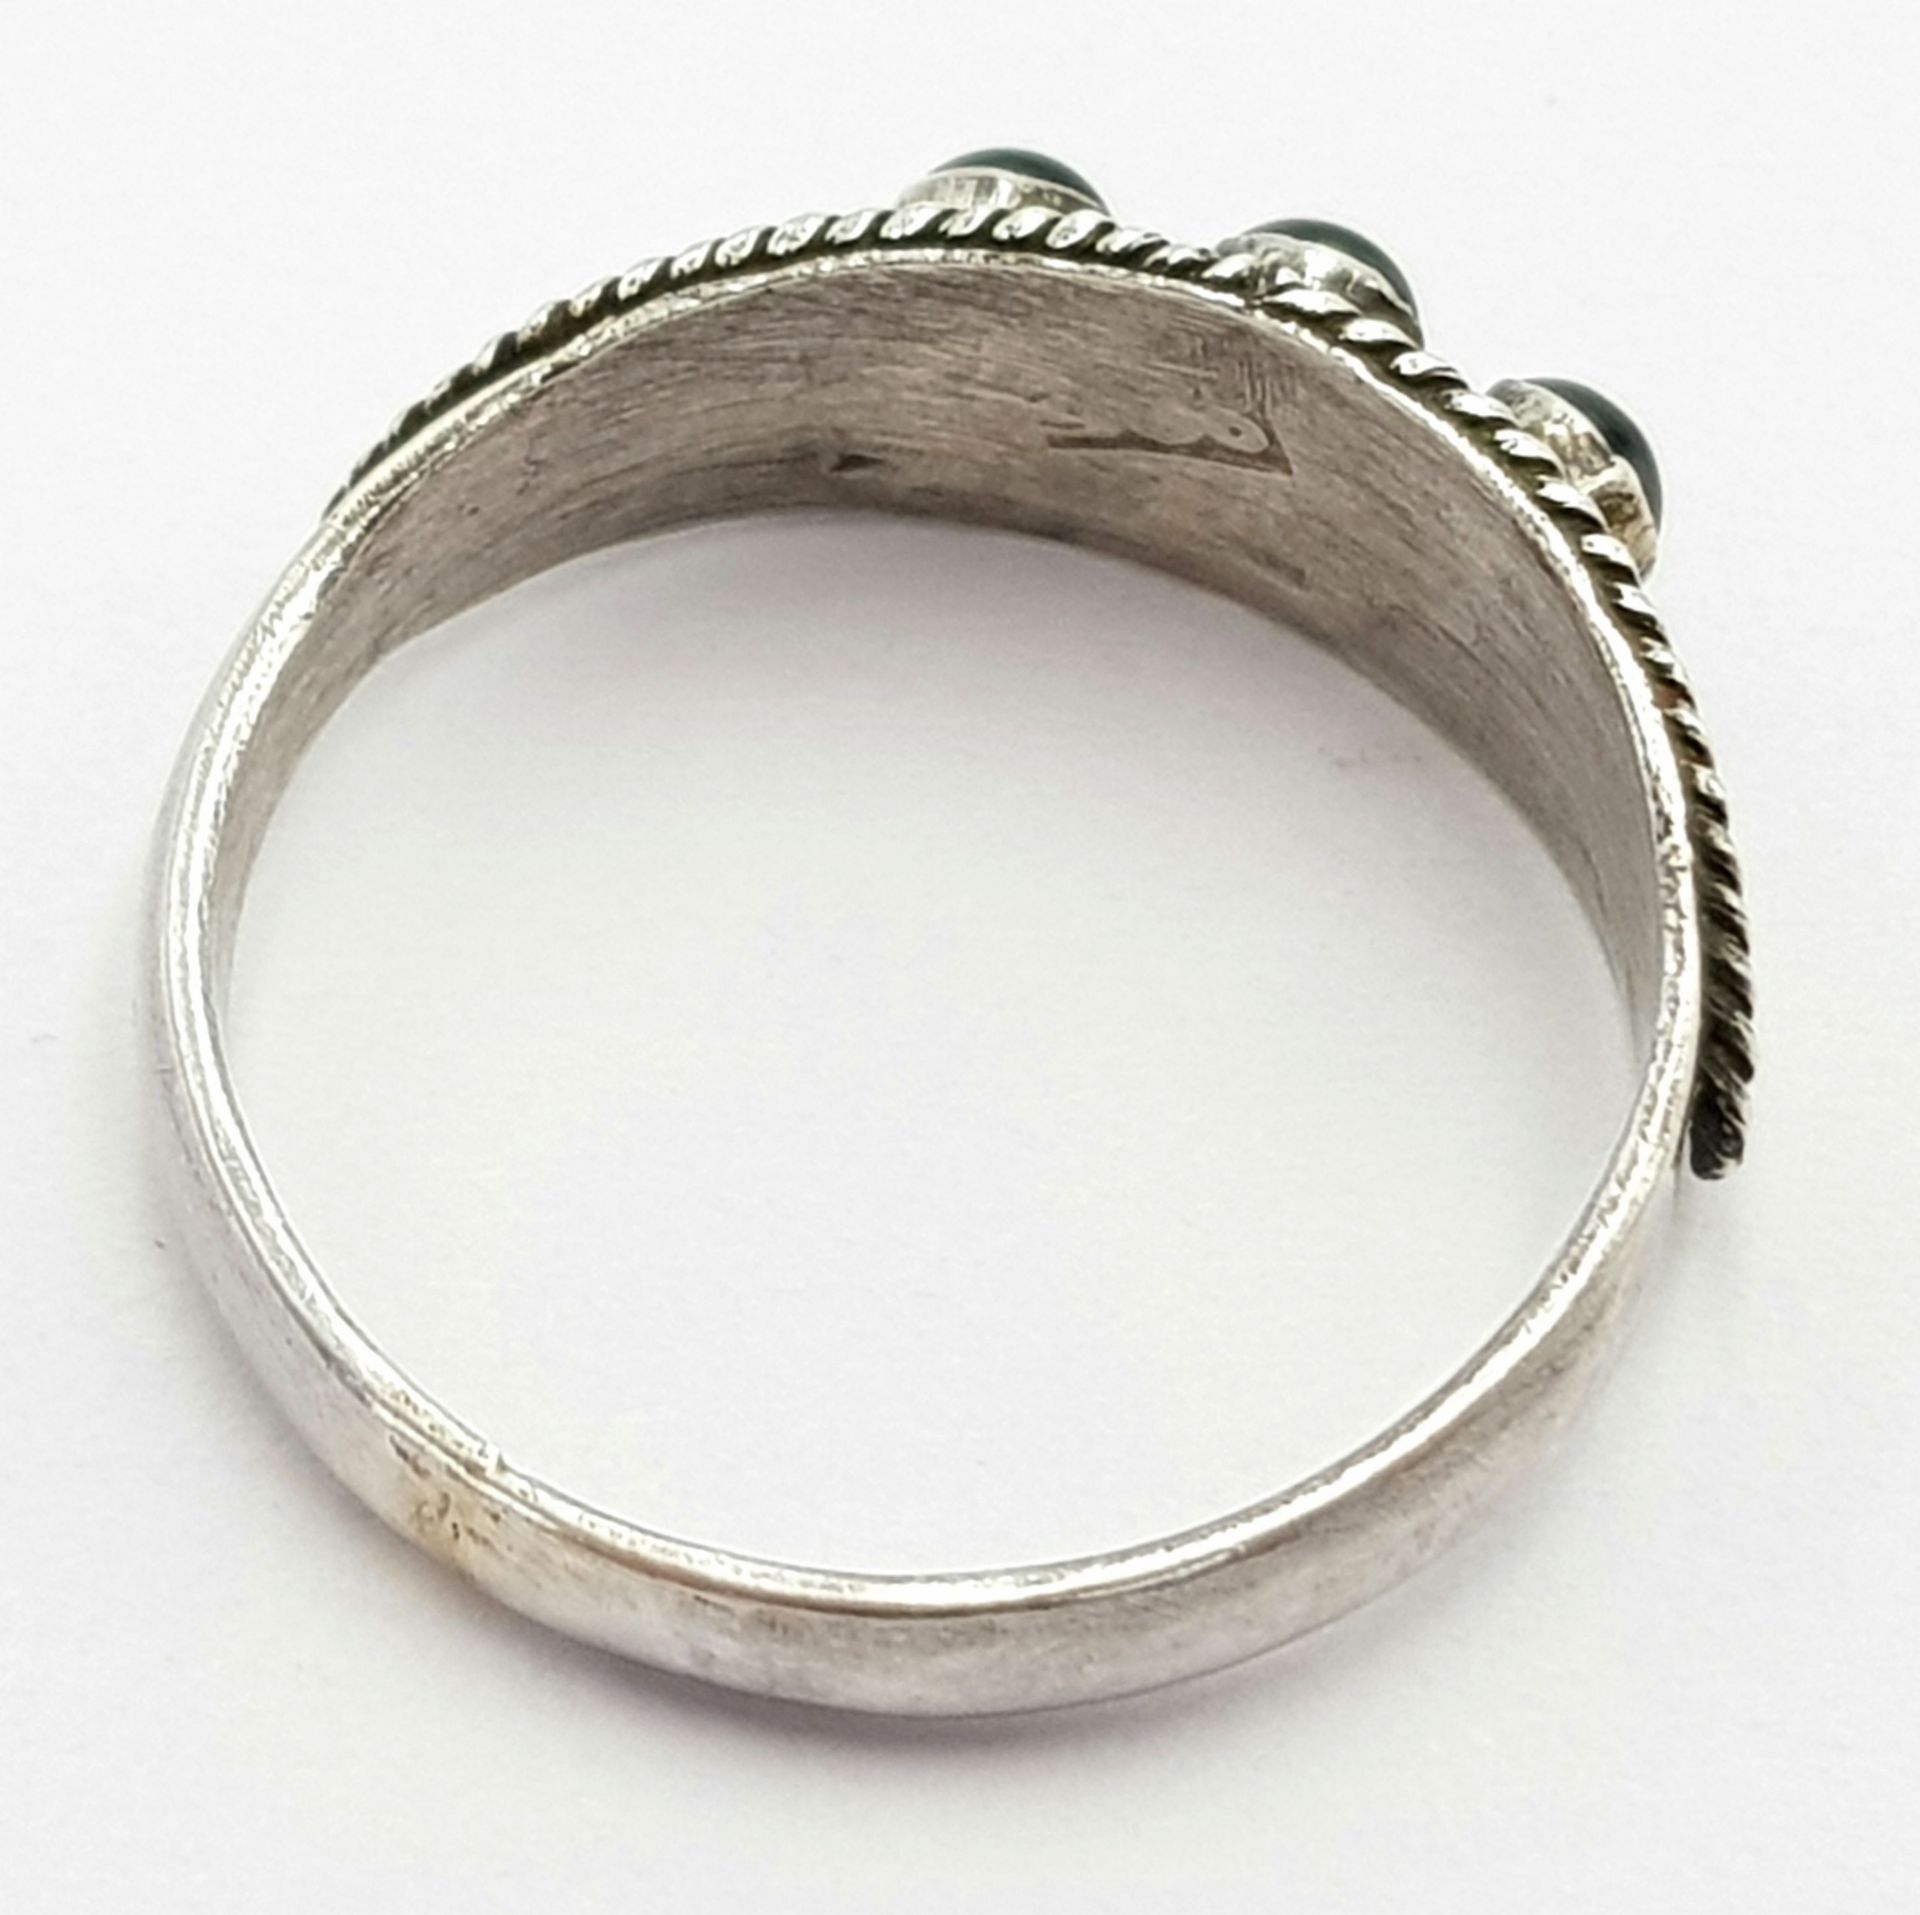 A Vintage or Older, Gold on Sterling Silver, Black Onyx Cabachon Set Ring. Size O. Measures 7mm Wide - Image 4 of 5